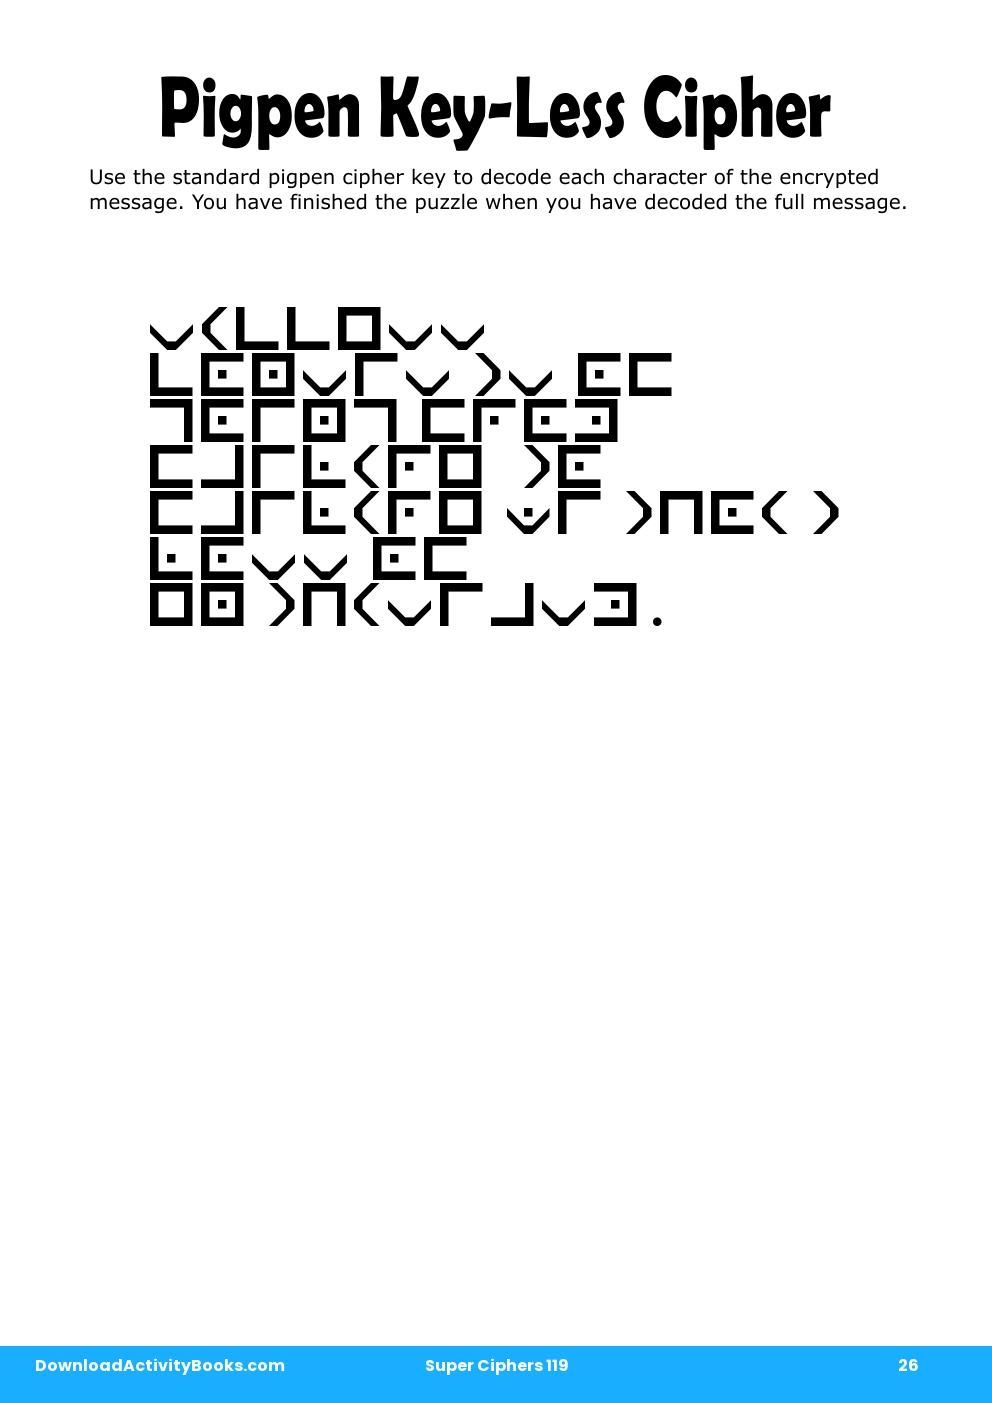 Pigpen Cipher in Super Ciphers 119